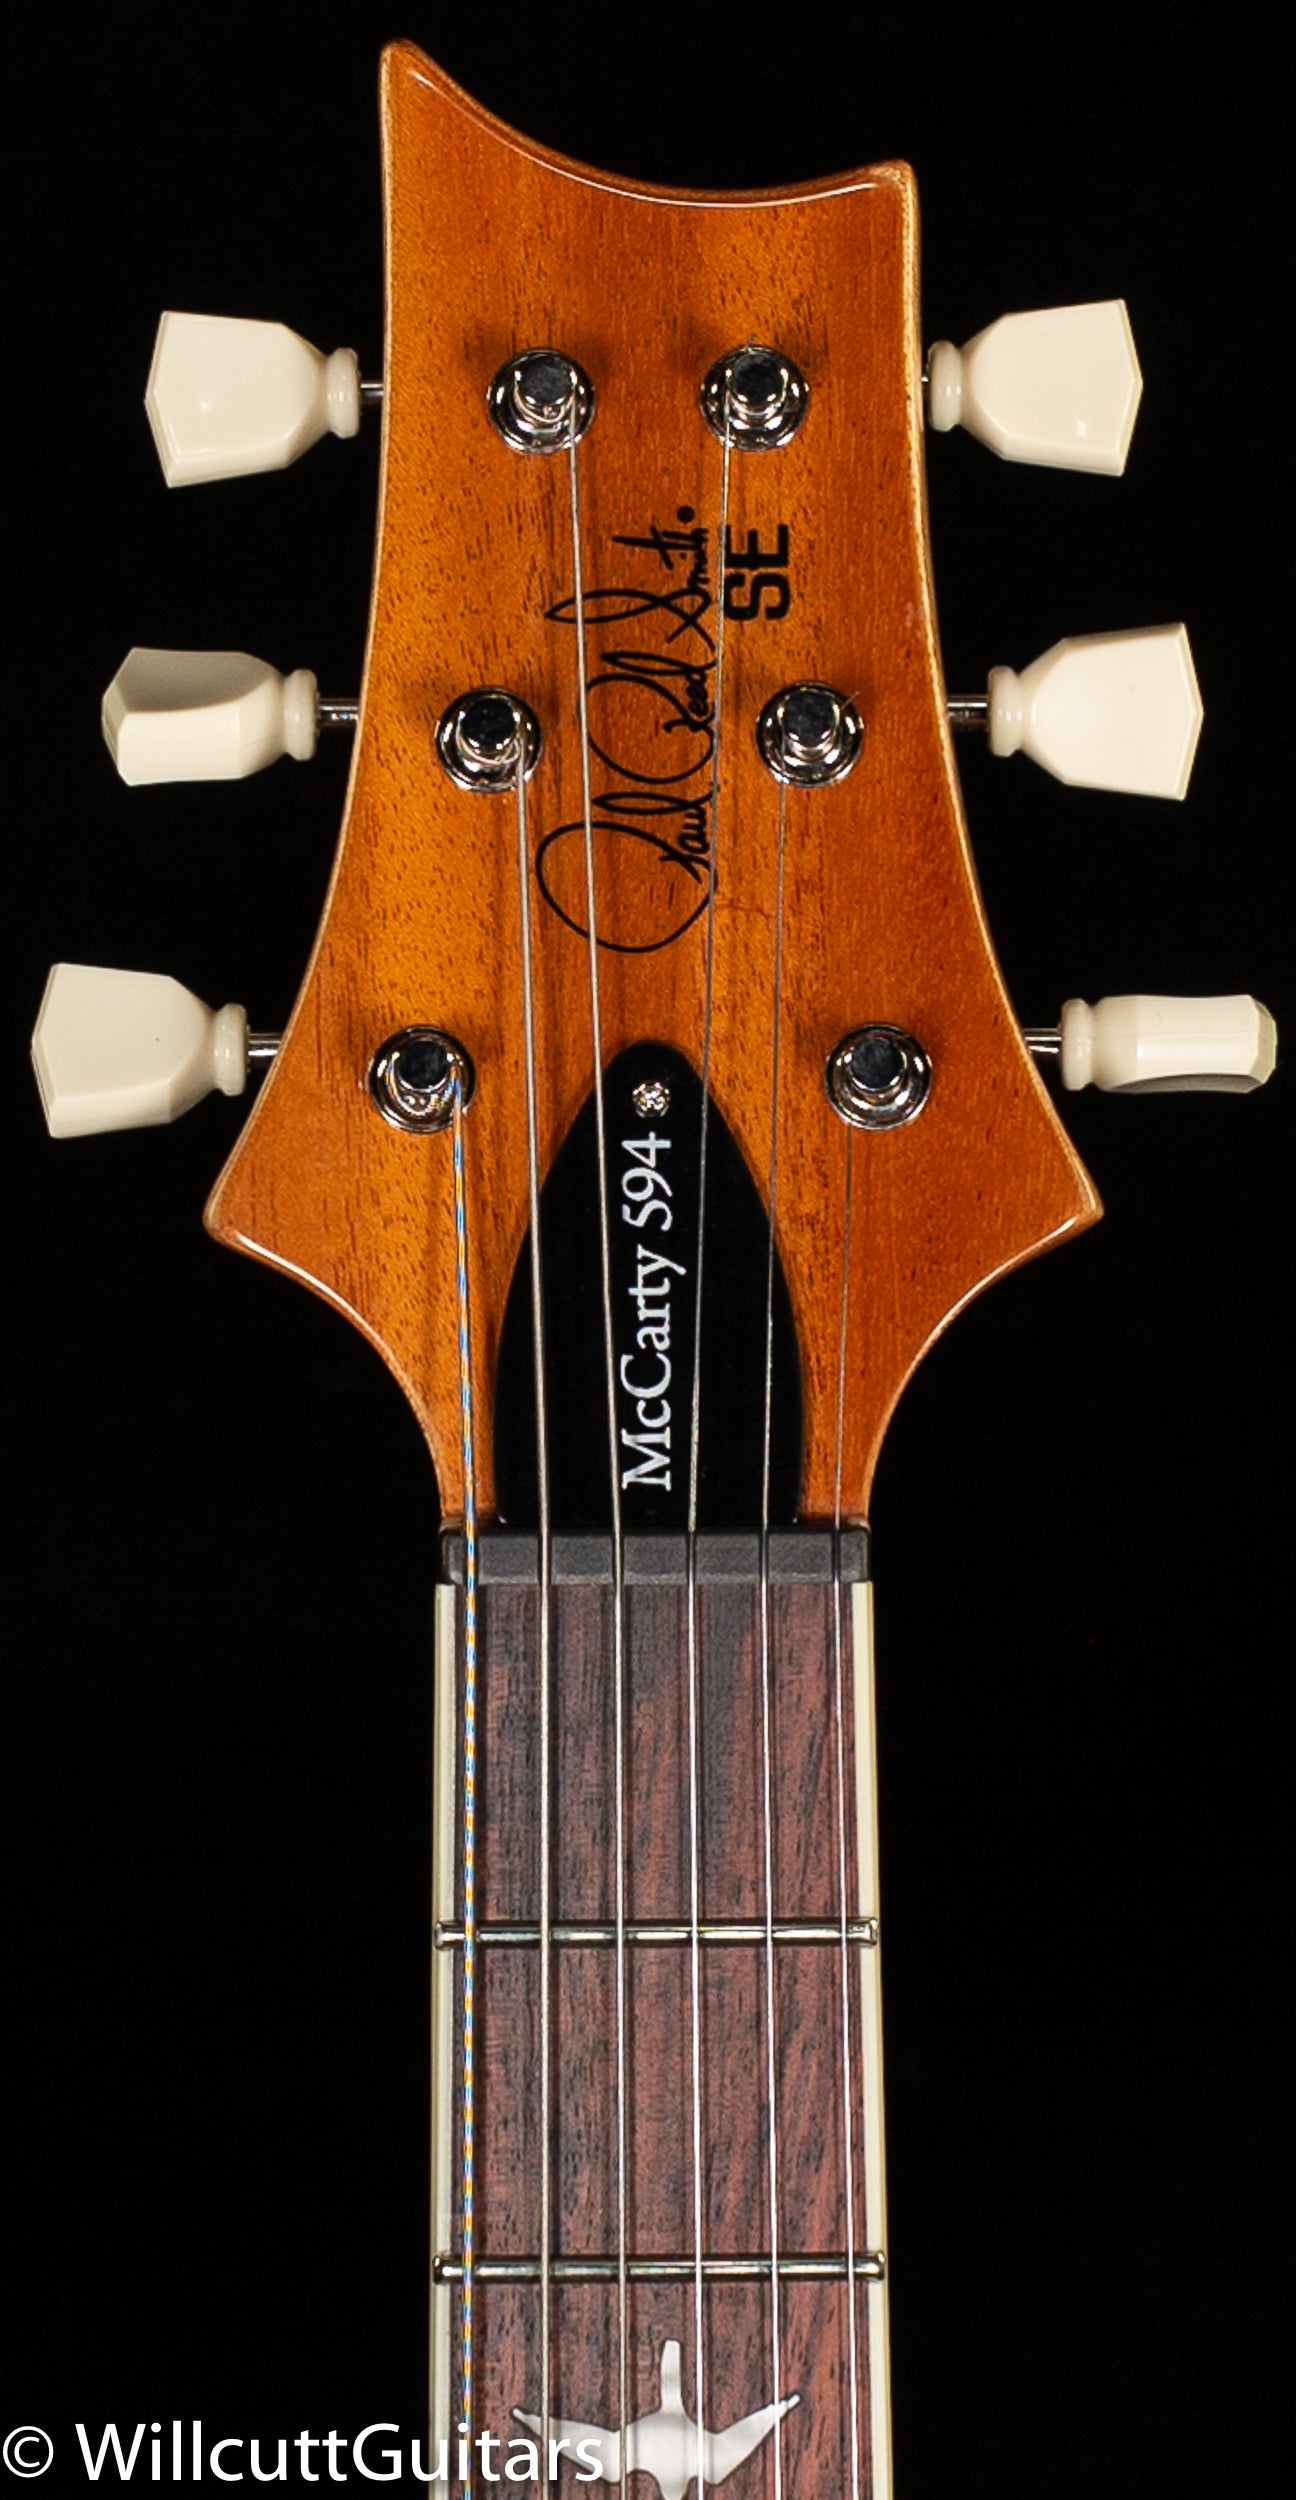 PRS SE Singlecut McCarty 594 Electric Guitar - Faded Blue